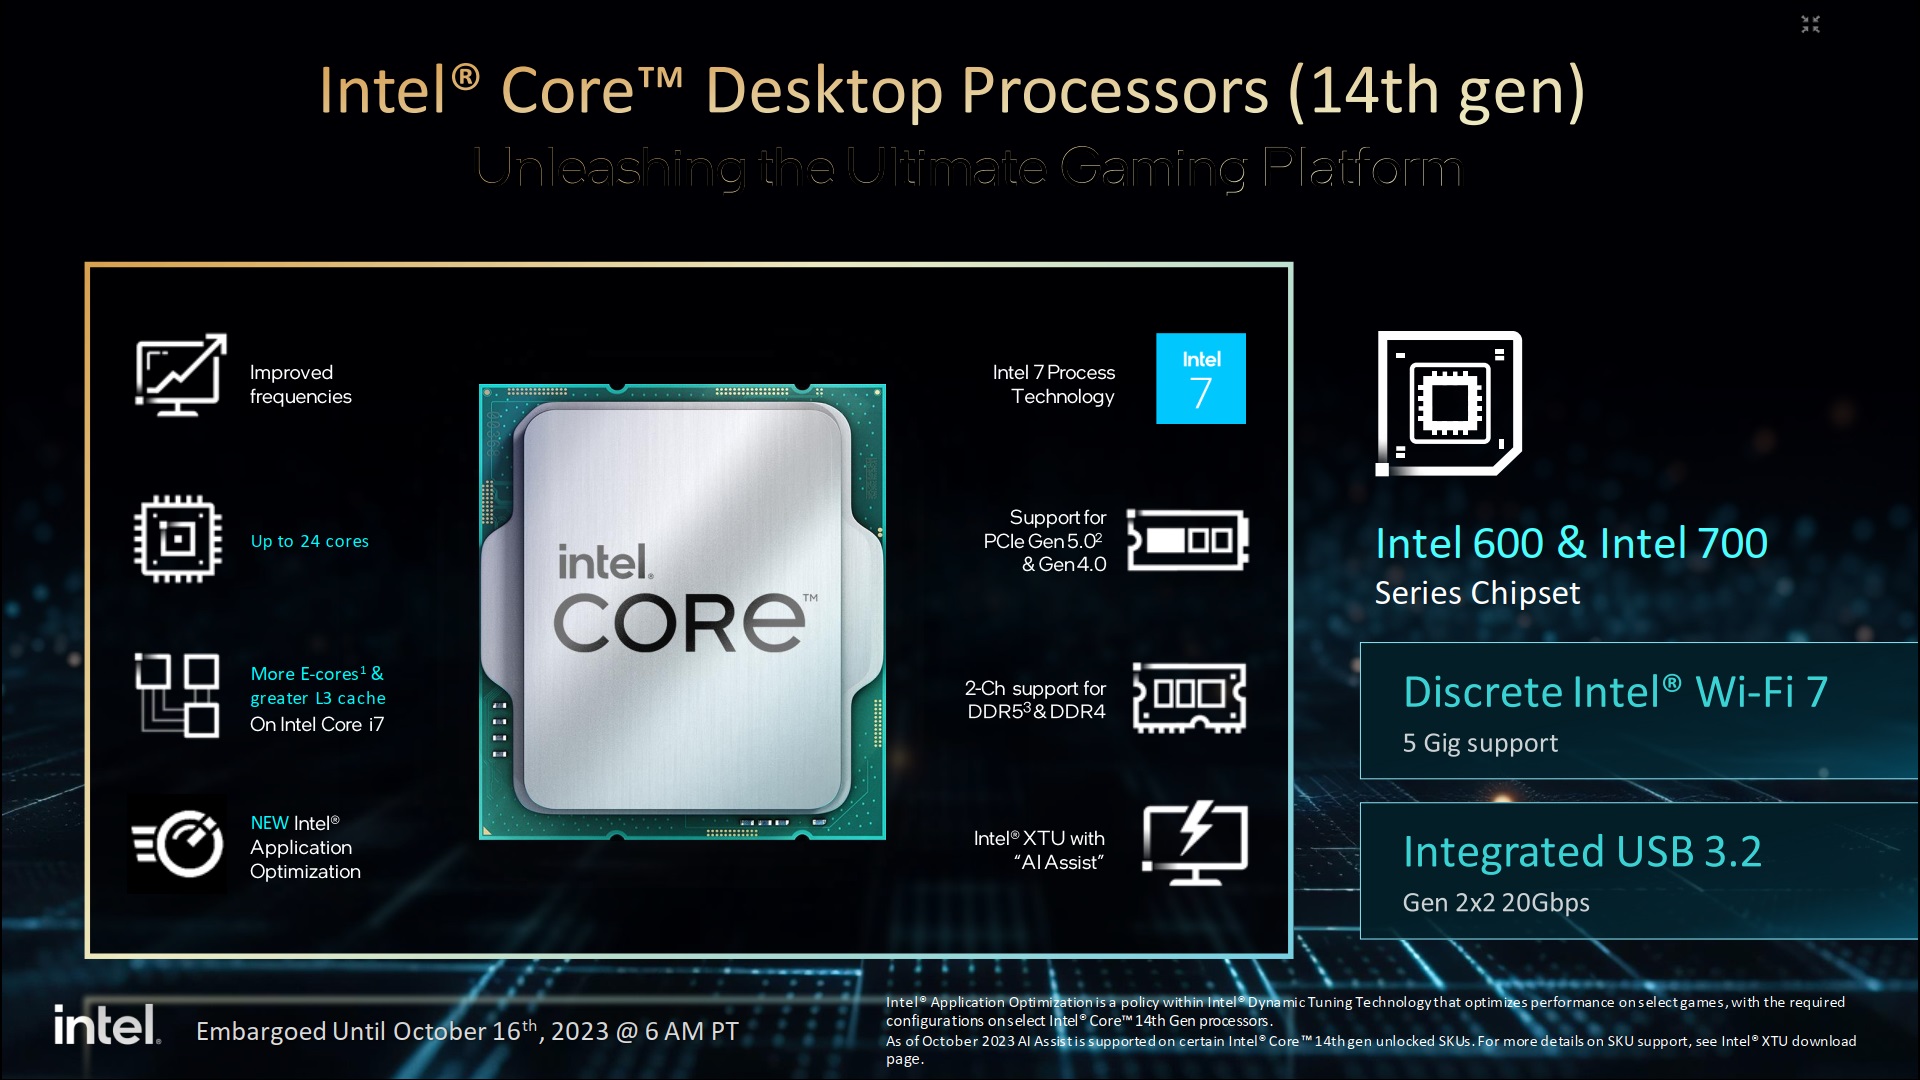 Test Intel Core i7-14700K. Jedyny sensowny model 14. generacji